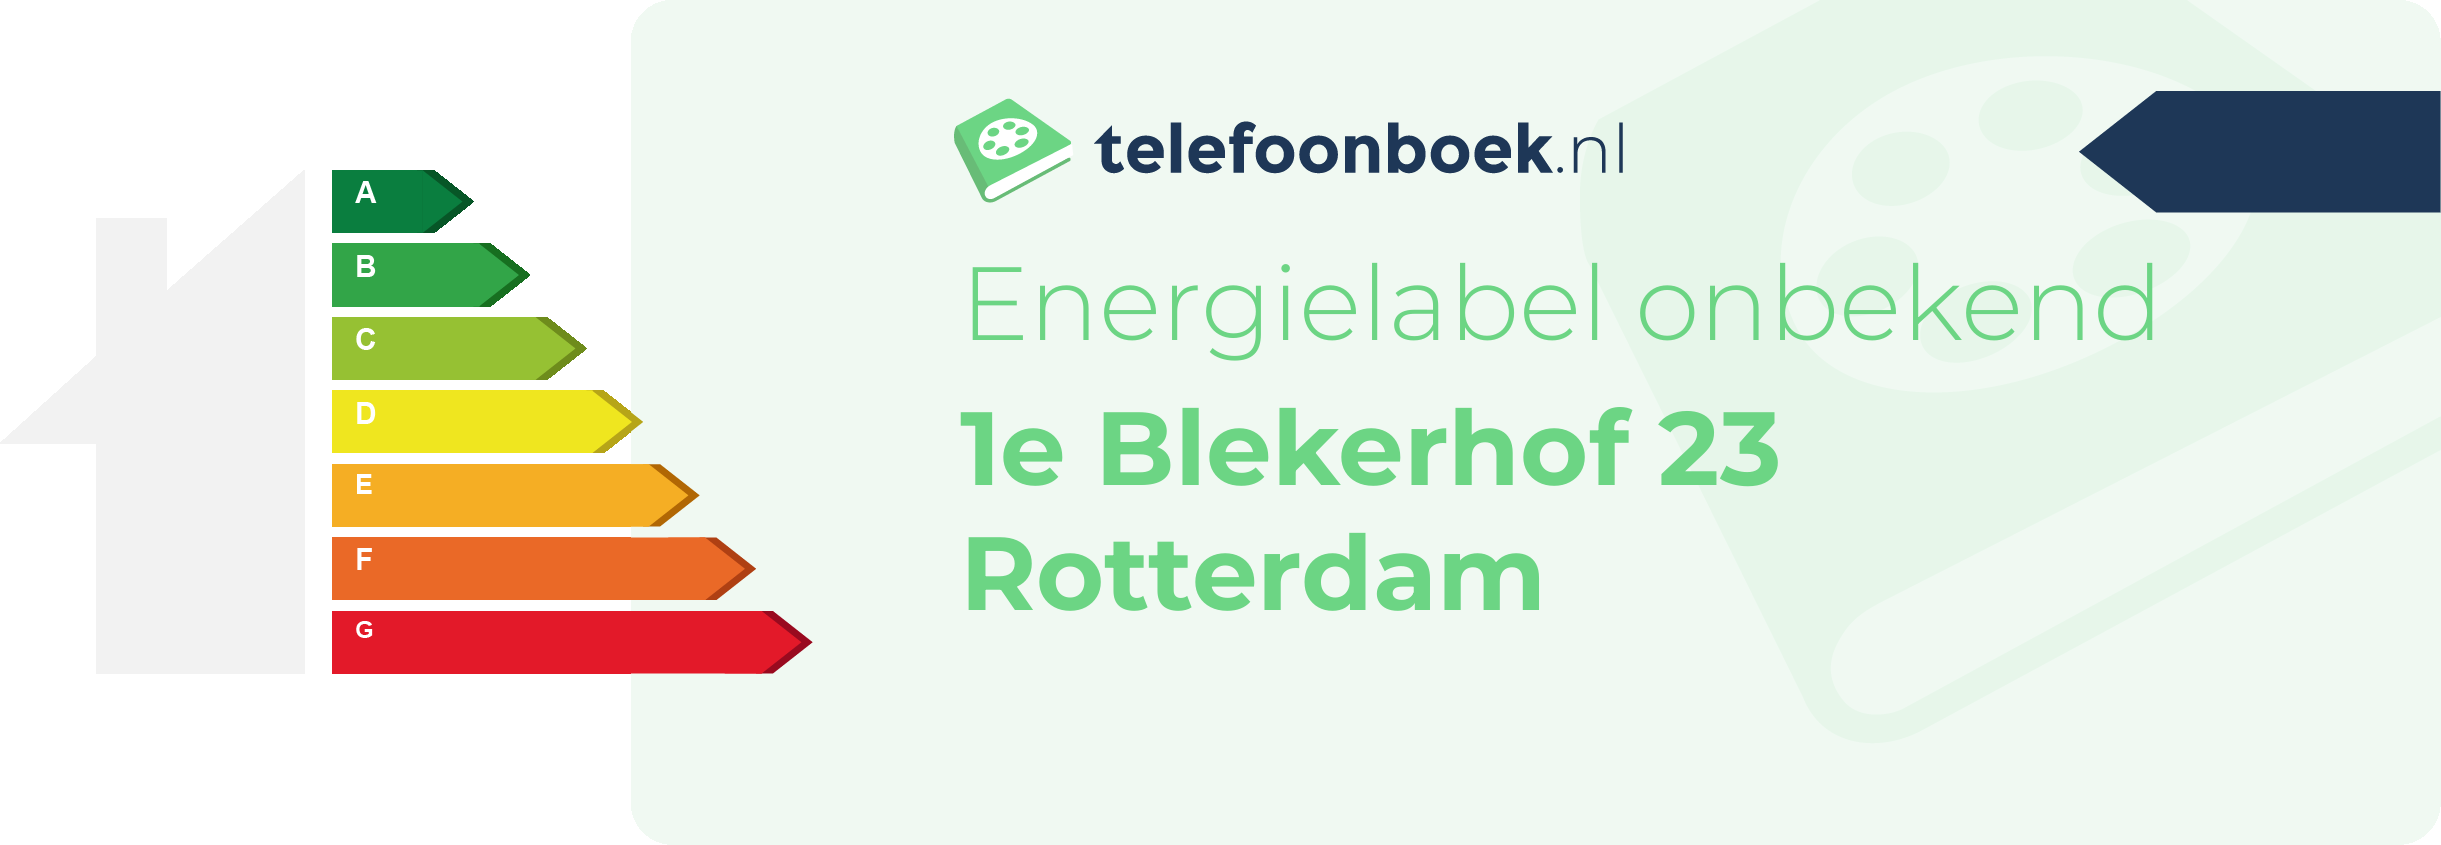 Energielabel 1e Blekerhof 23 Rotterdam